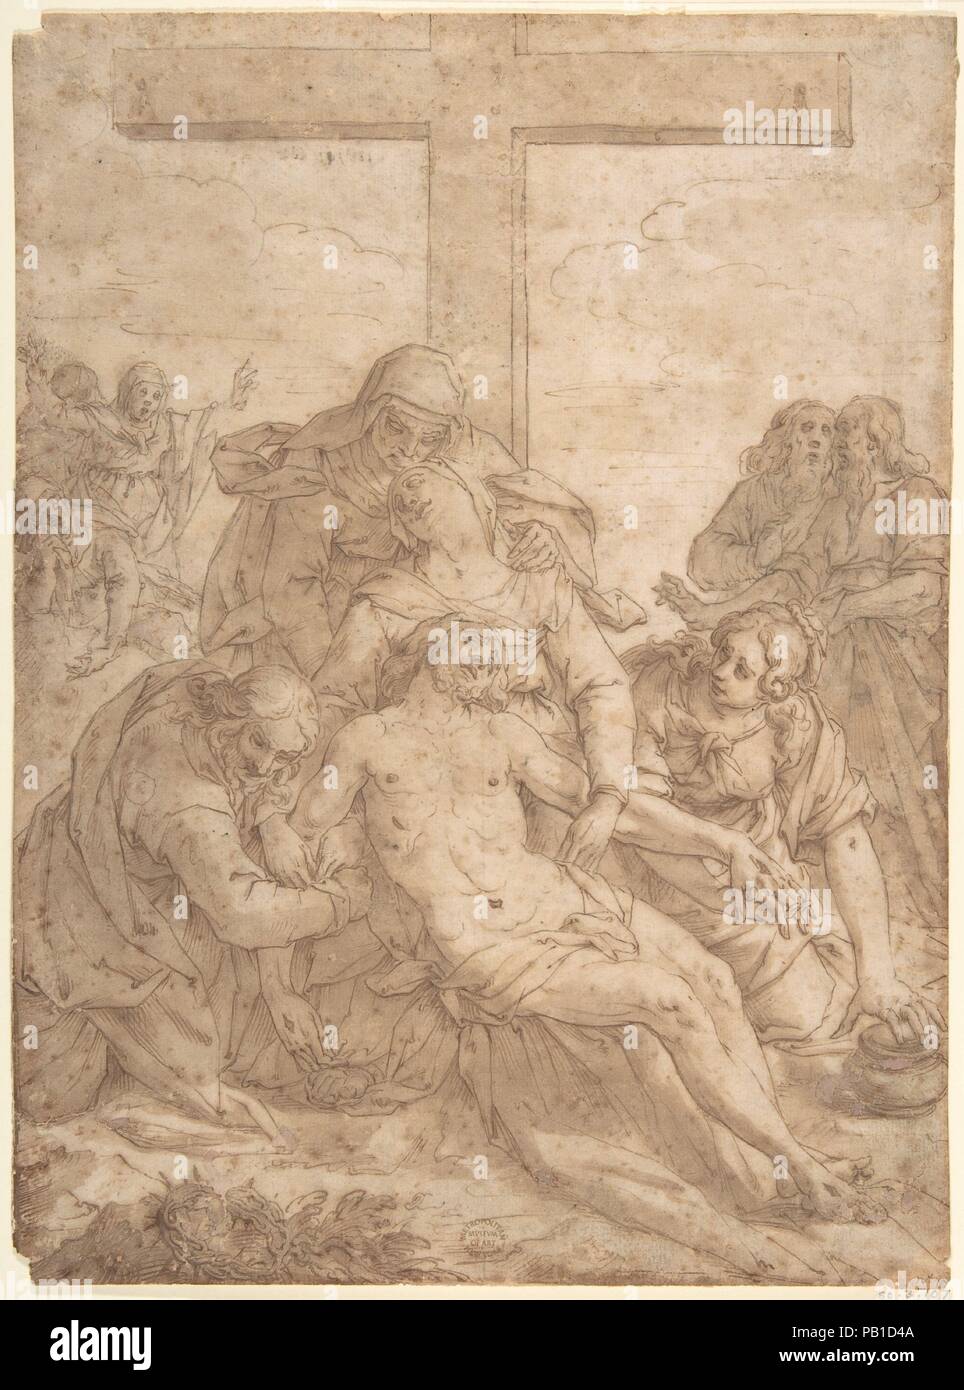 Descent from the Cross. Artist: Pasquale Ottino (Pasqualotto) (Italian, Verona 1578-1630 Verona). Dimensions: 12 1/2 x 9 1/4in. (31.8 x 23.5cm). Date: 1615-16. Museum: Metropolitan Museum of Art, New York, USA. Stock Photo